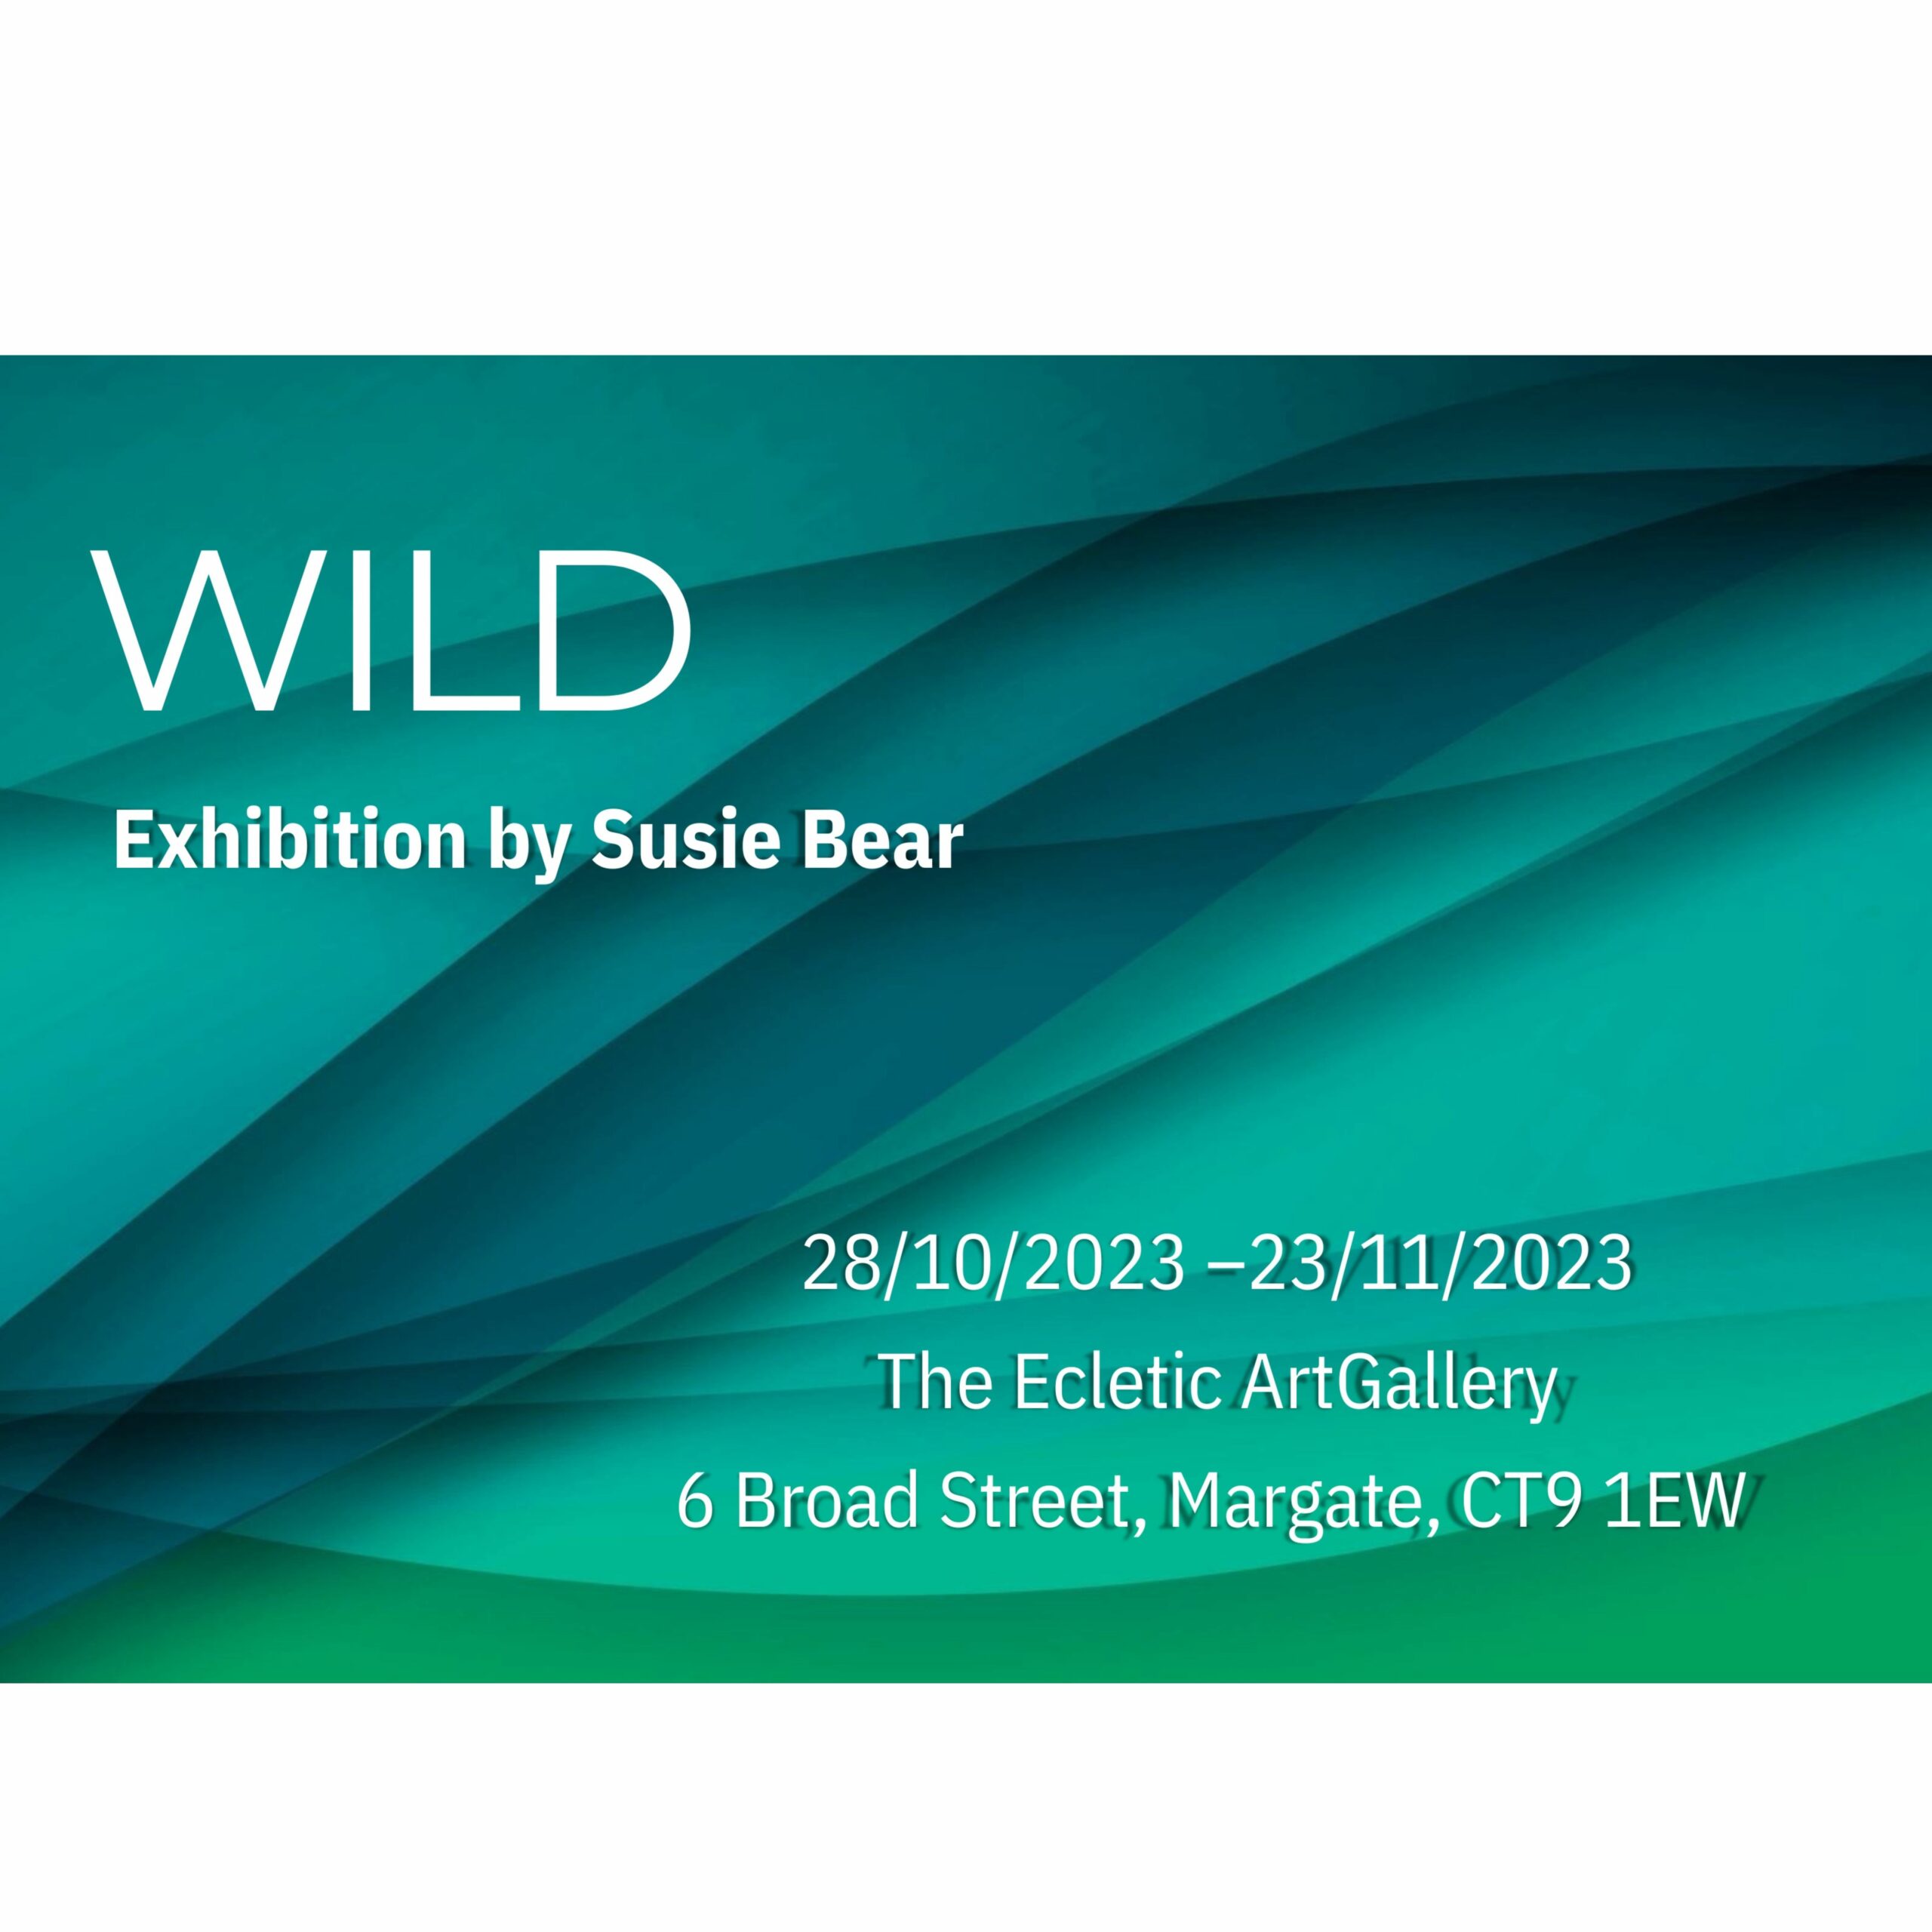 Wild: Exhibition by Susie Bear